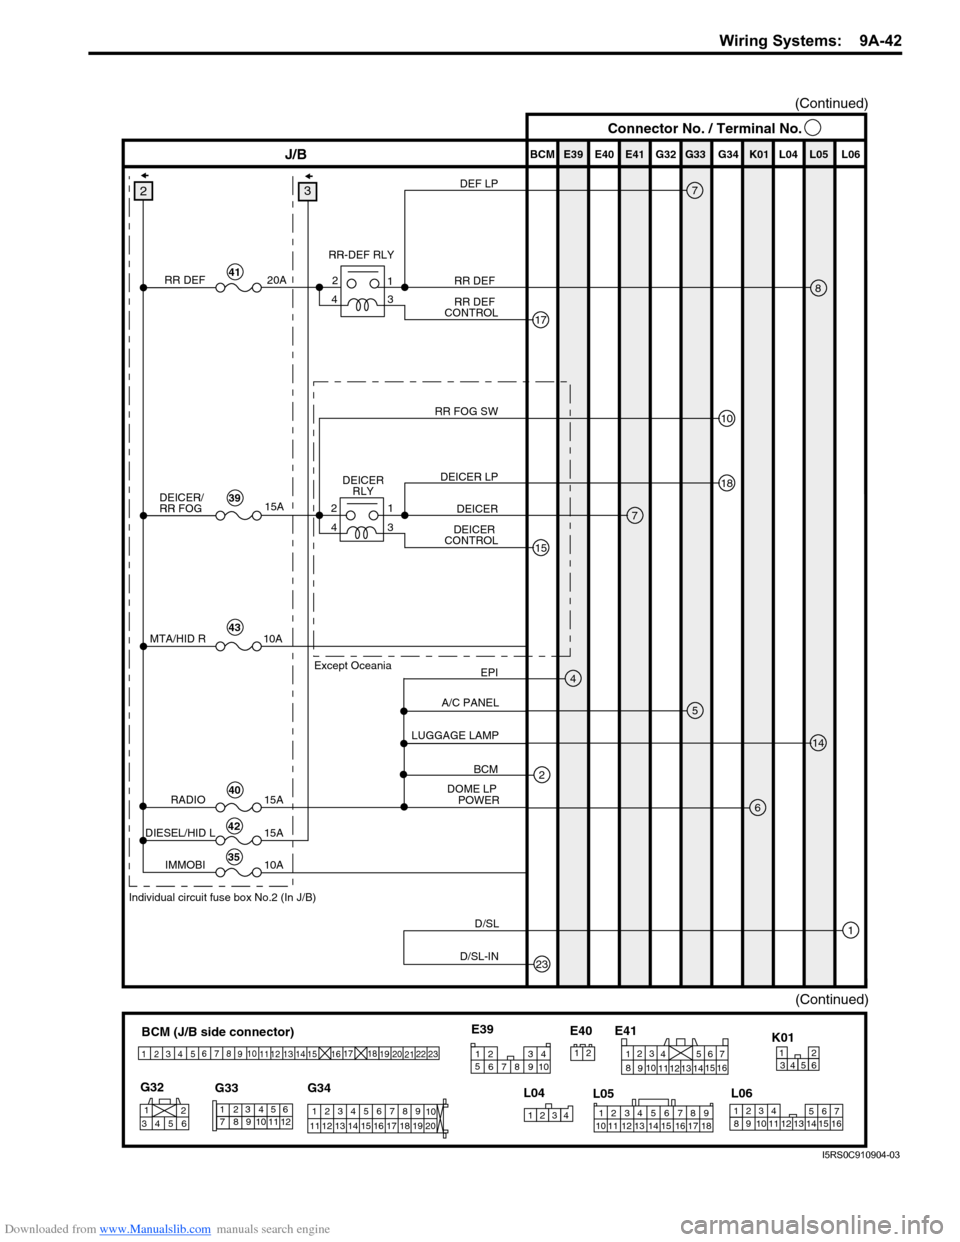 SUZUKI SWIFT 2007 2.G Service User Guide Downloaded from www.Manualslib.com manuals search engine Wiring Systems:  9A-42
E39 E41E40
BCM G34G33G32 K01 L04 L05 L06J/B
7
17
8
5
4
14
2
23
1
6
3
(Continued)
DEF LP
RR DEF 
RR DEF 
CONTROL
RR-DEF R